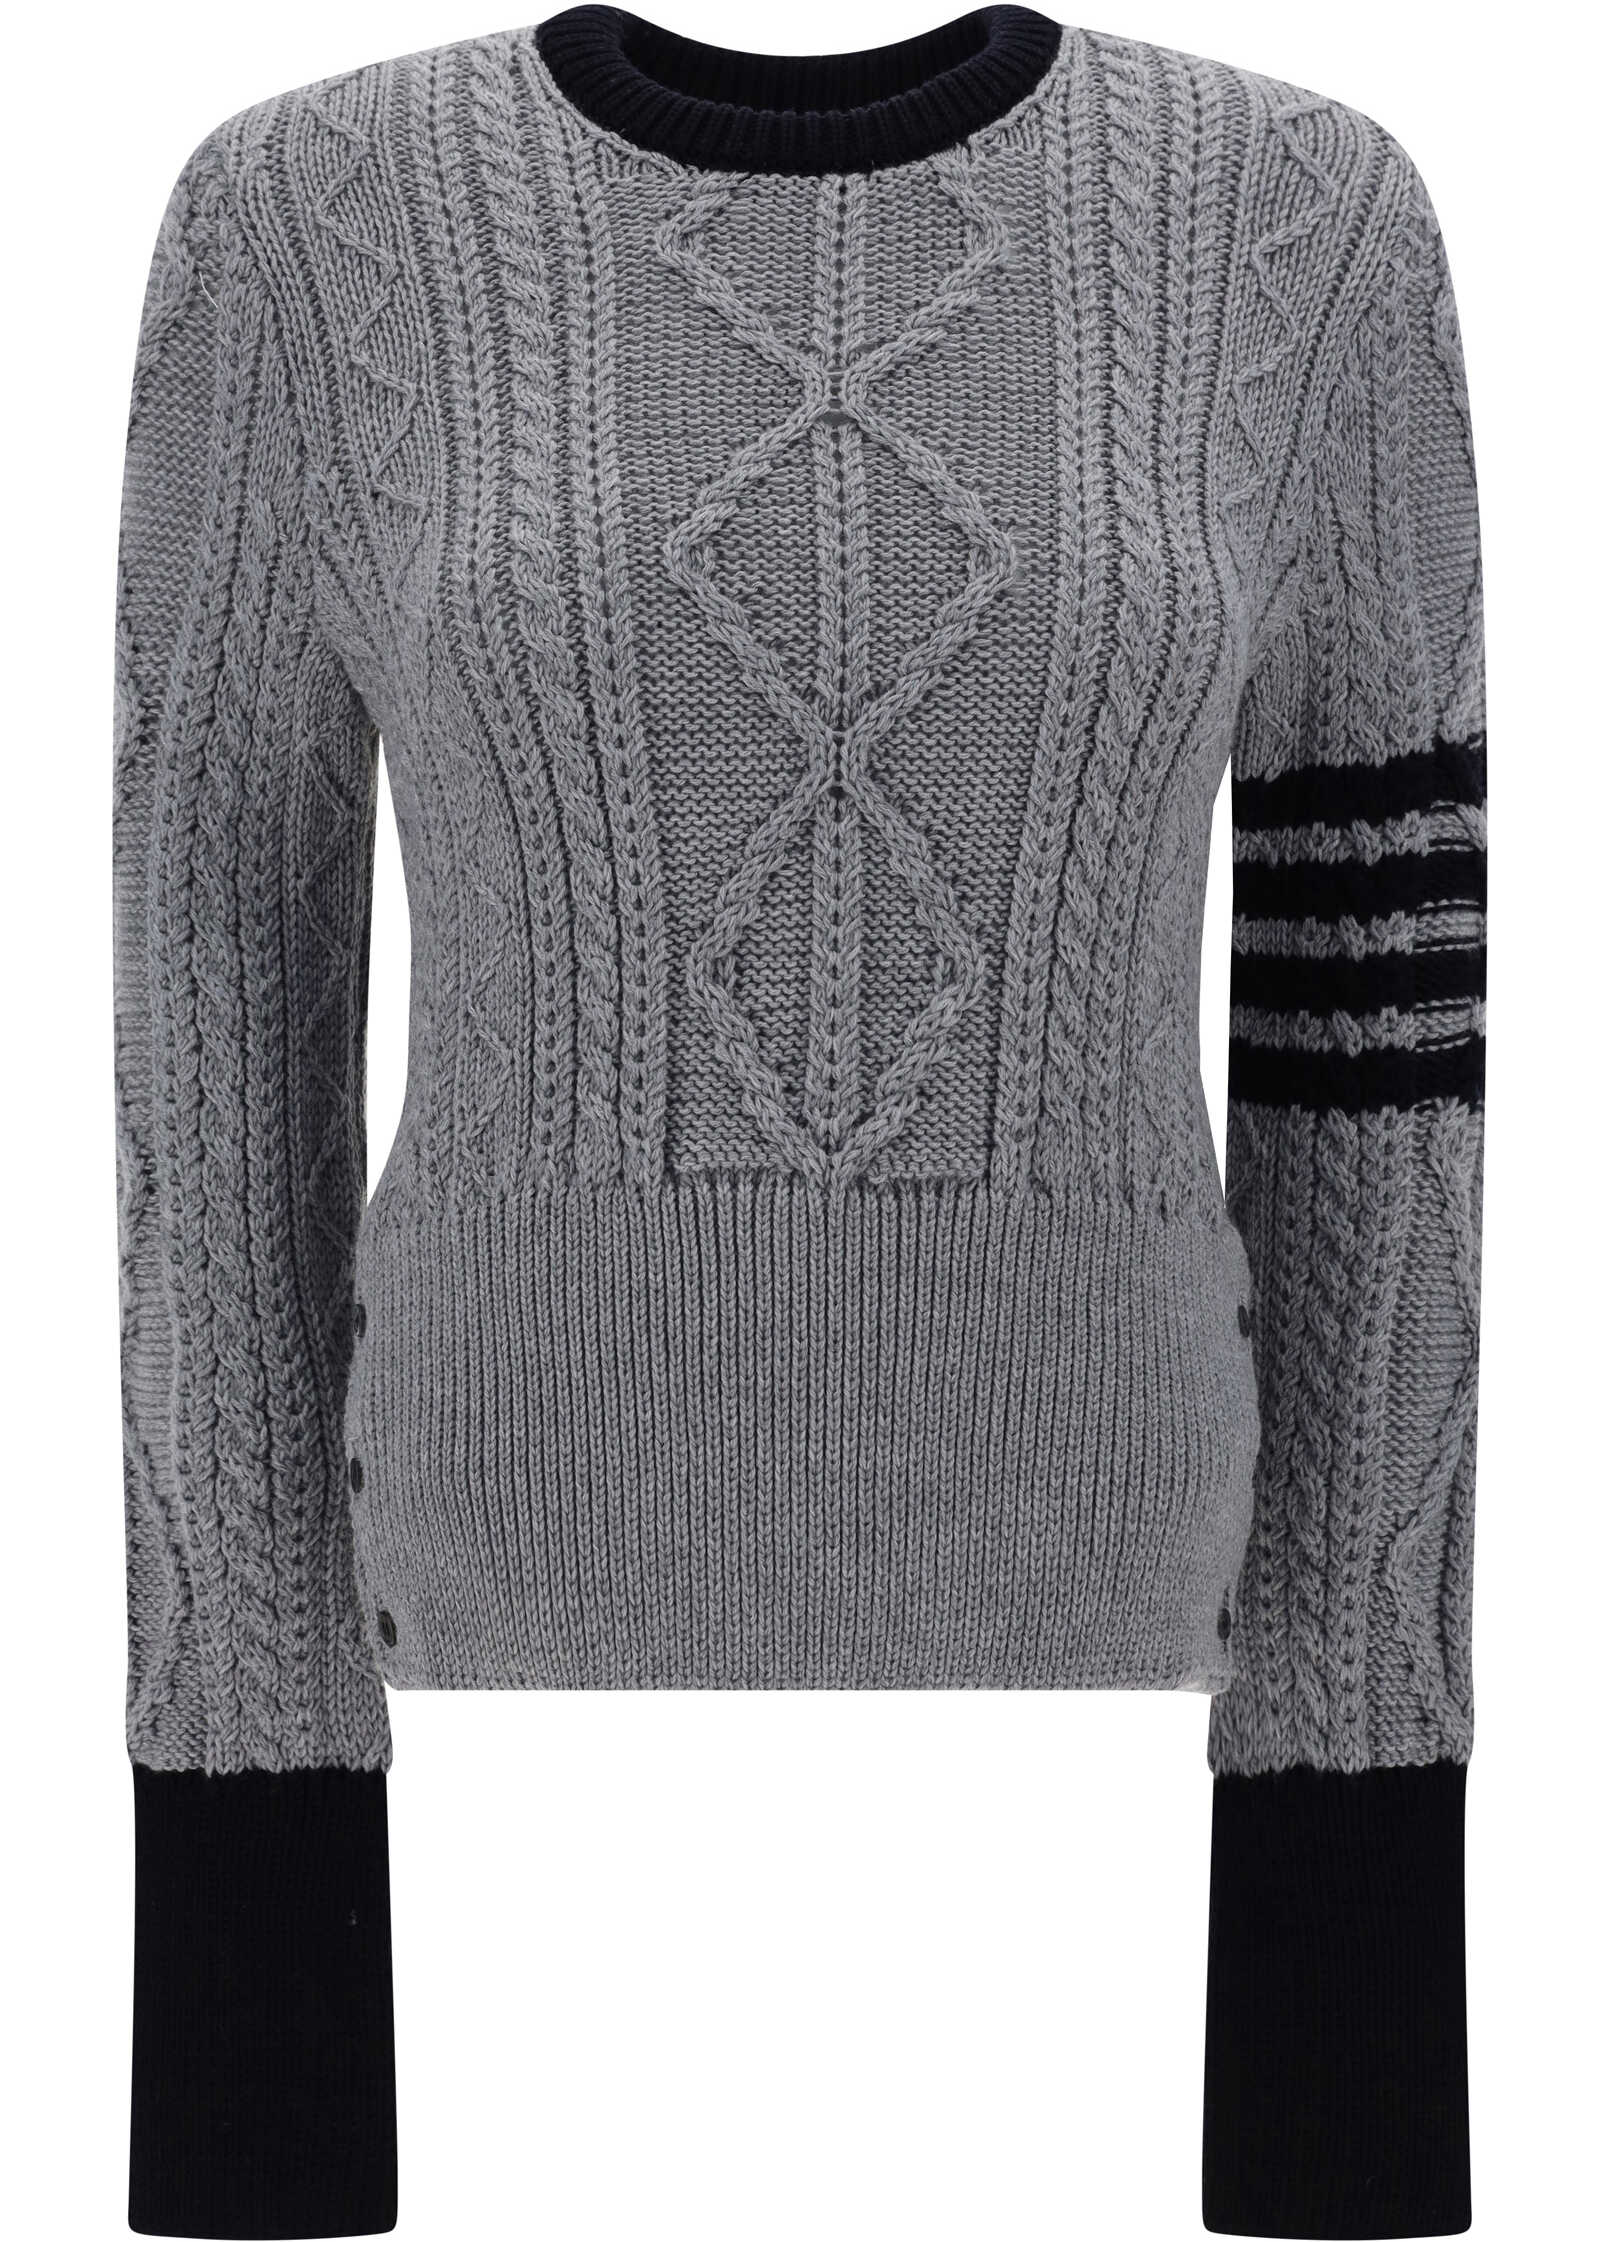 Thom Browne Sweater LT GREY